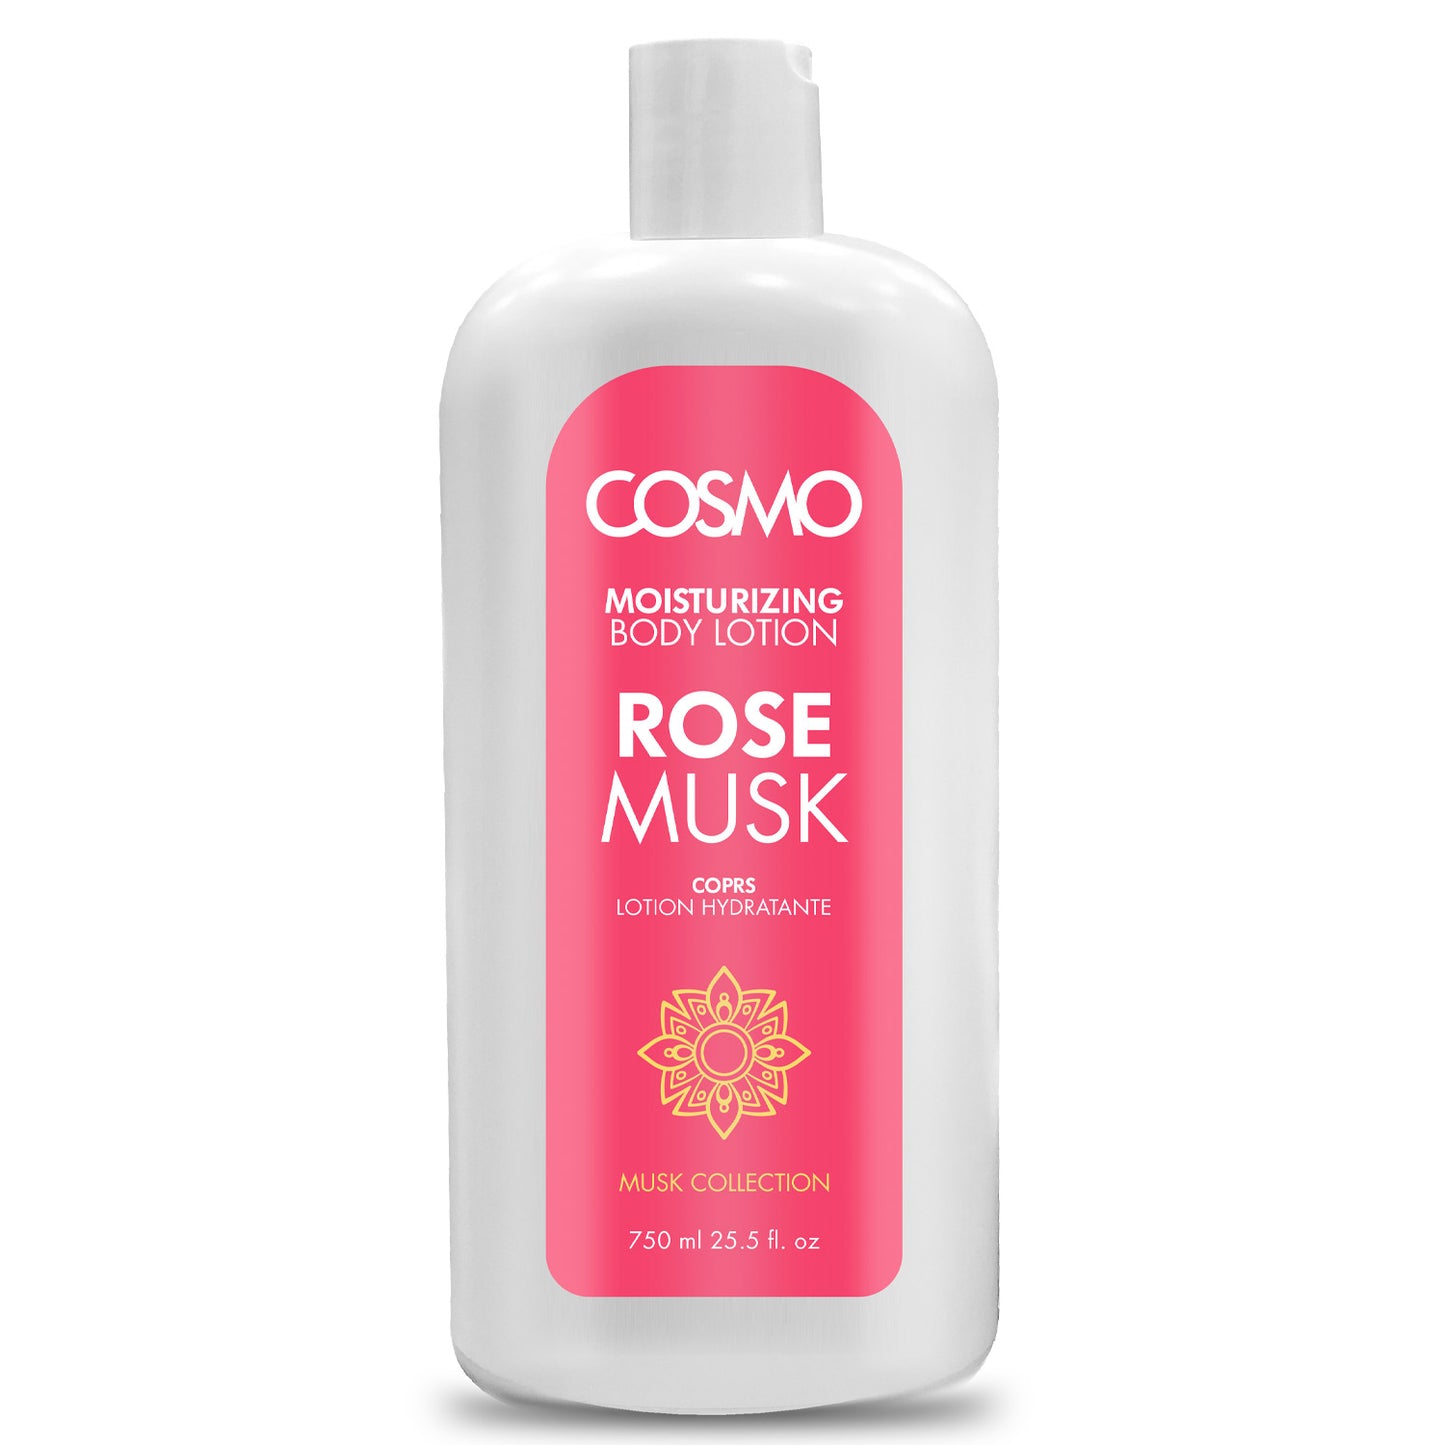 ROSE MUSK - MOISTURIZING BODY LOTION 750ML